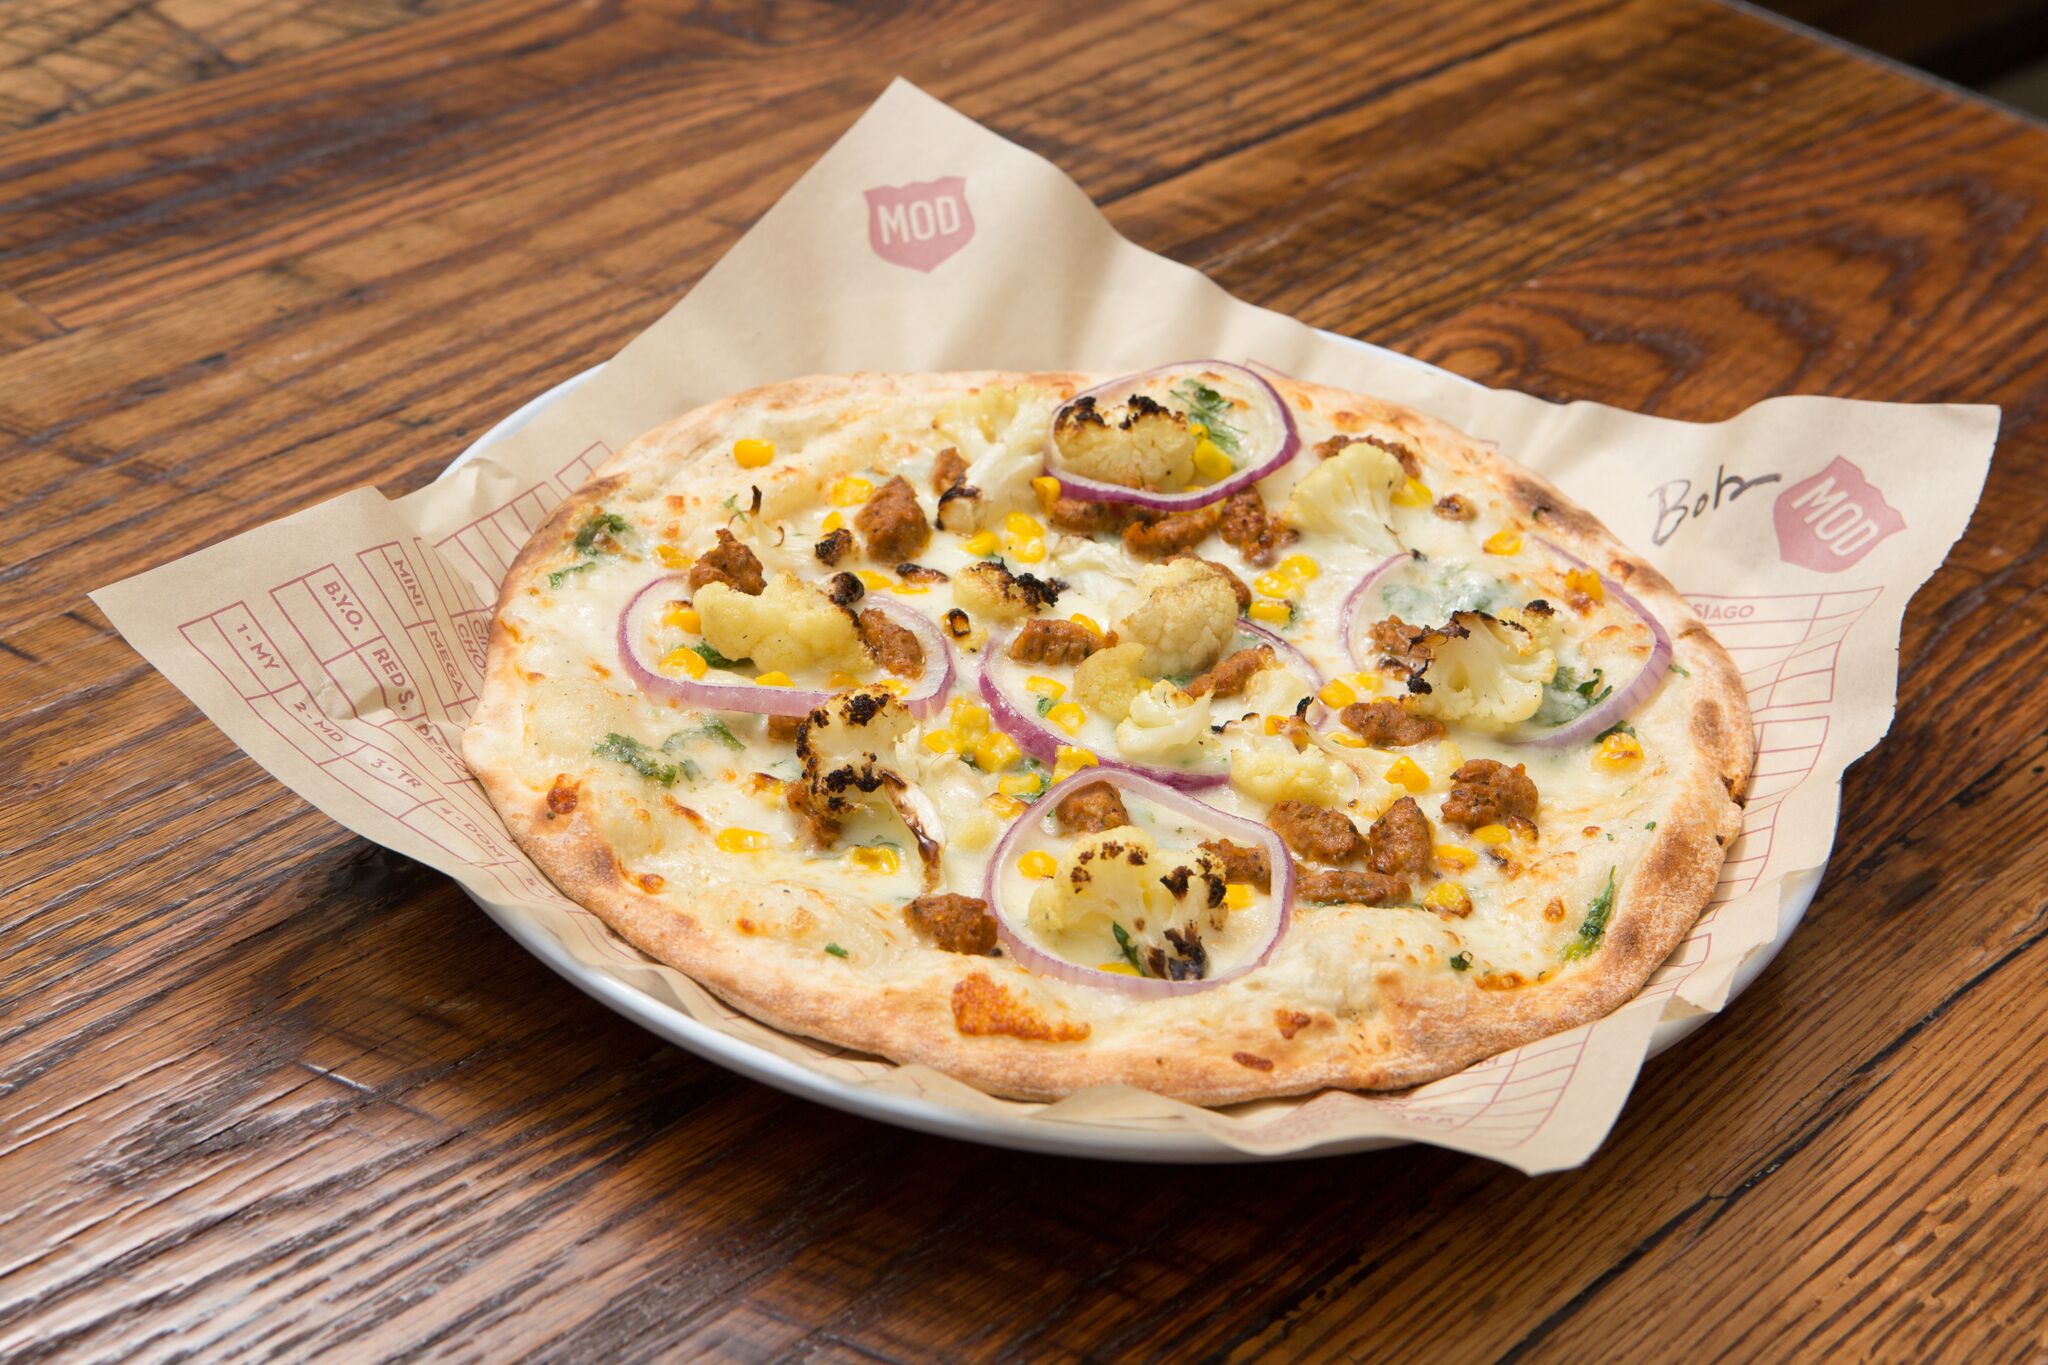 Bojangles’ Franchisees Sign MultiUnit MOD Pizza Deal For